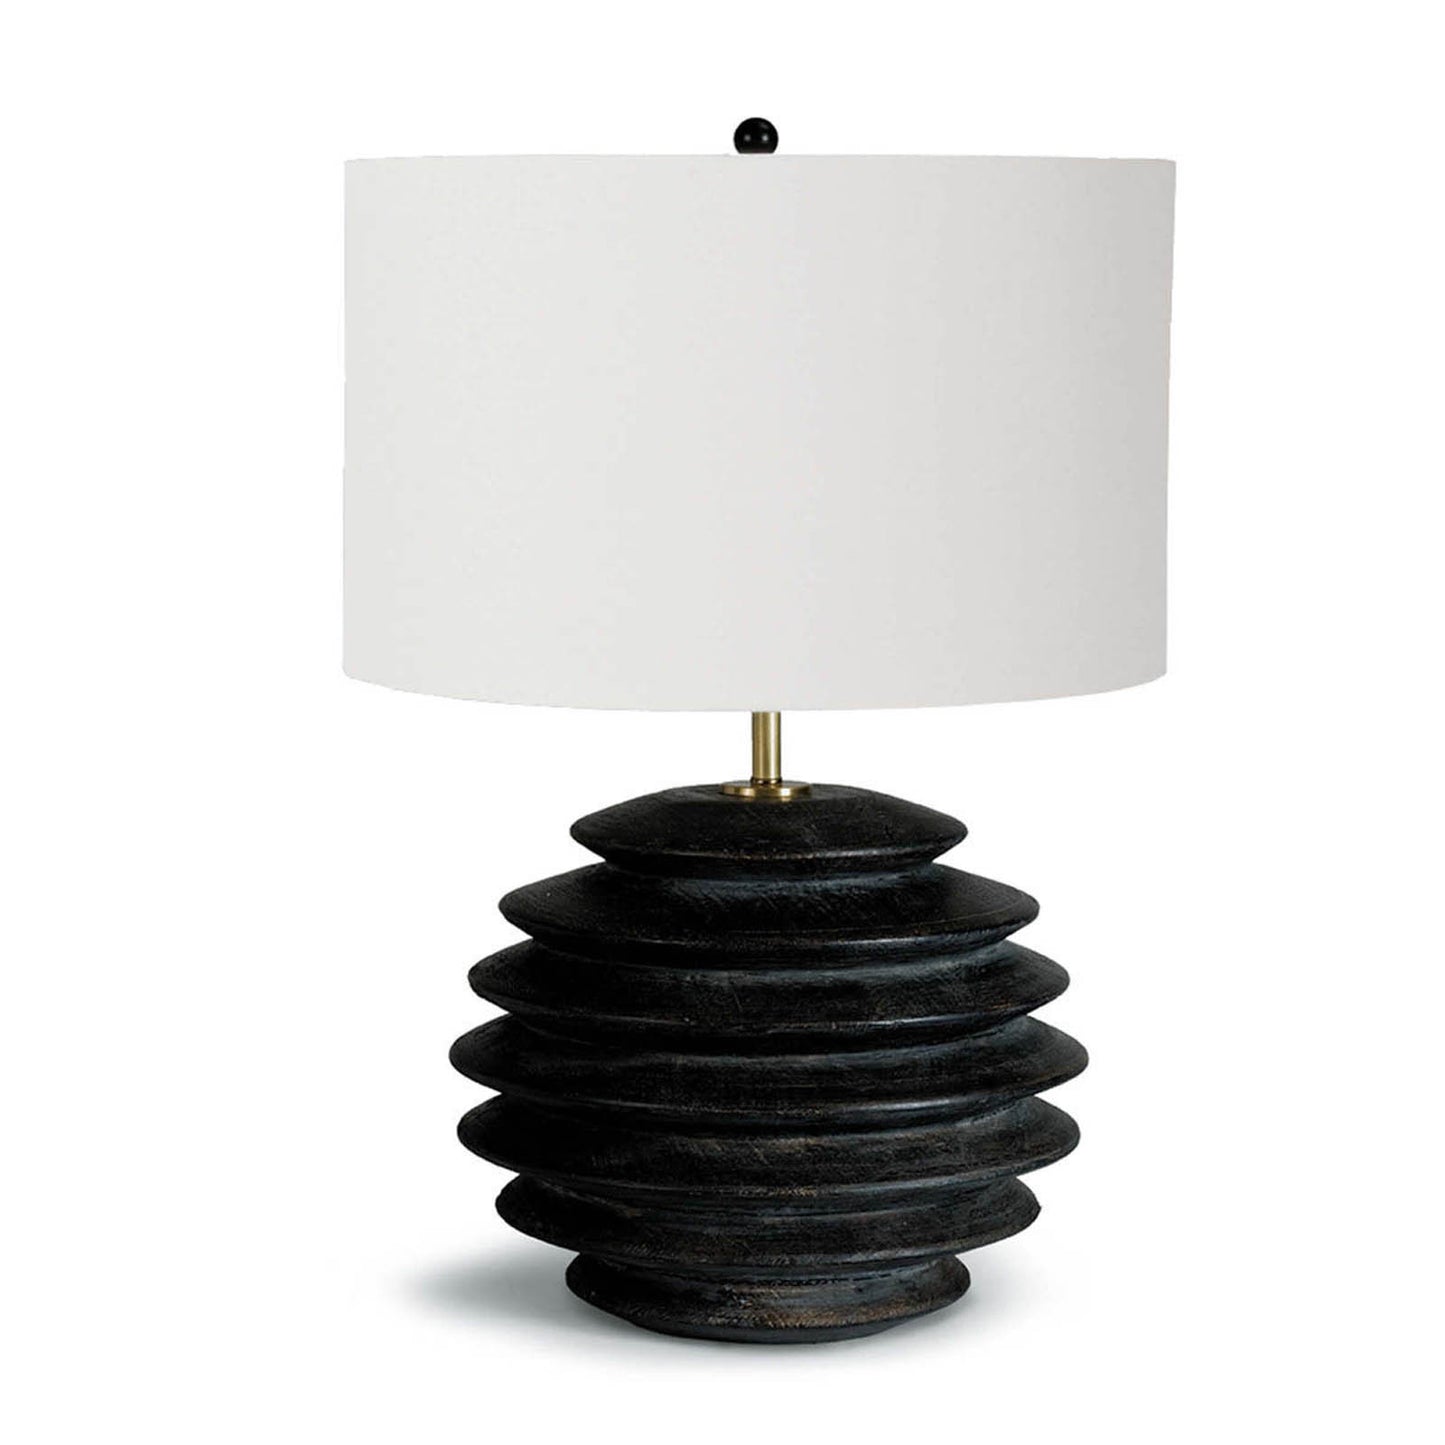 Regina Andrew Accordian Black Round Table Lamp